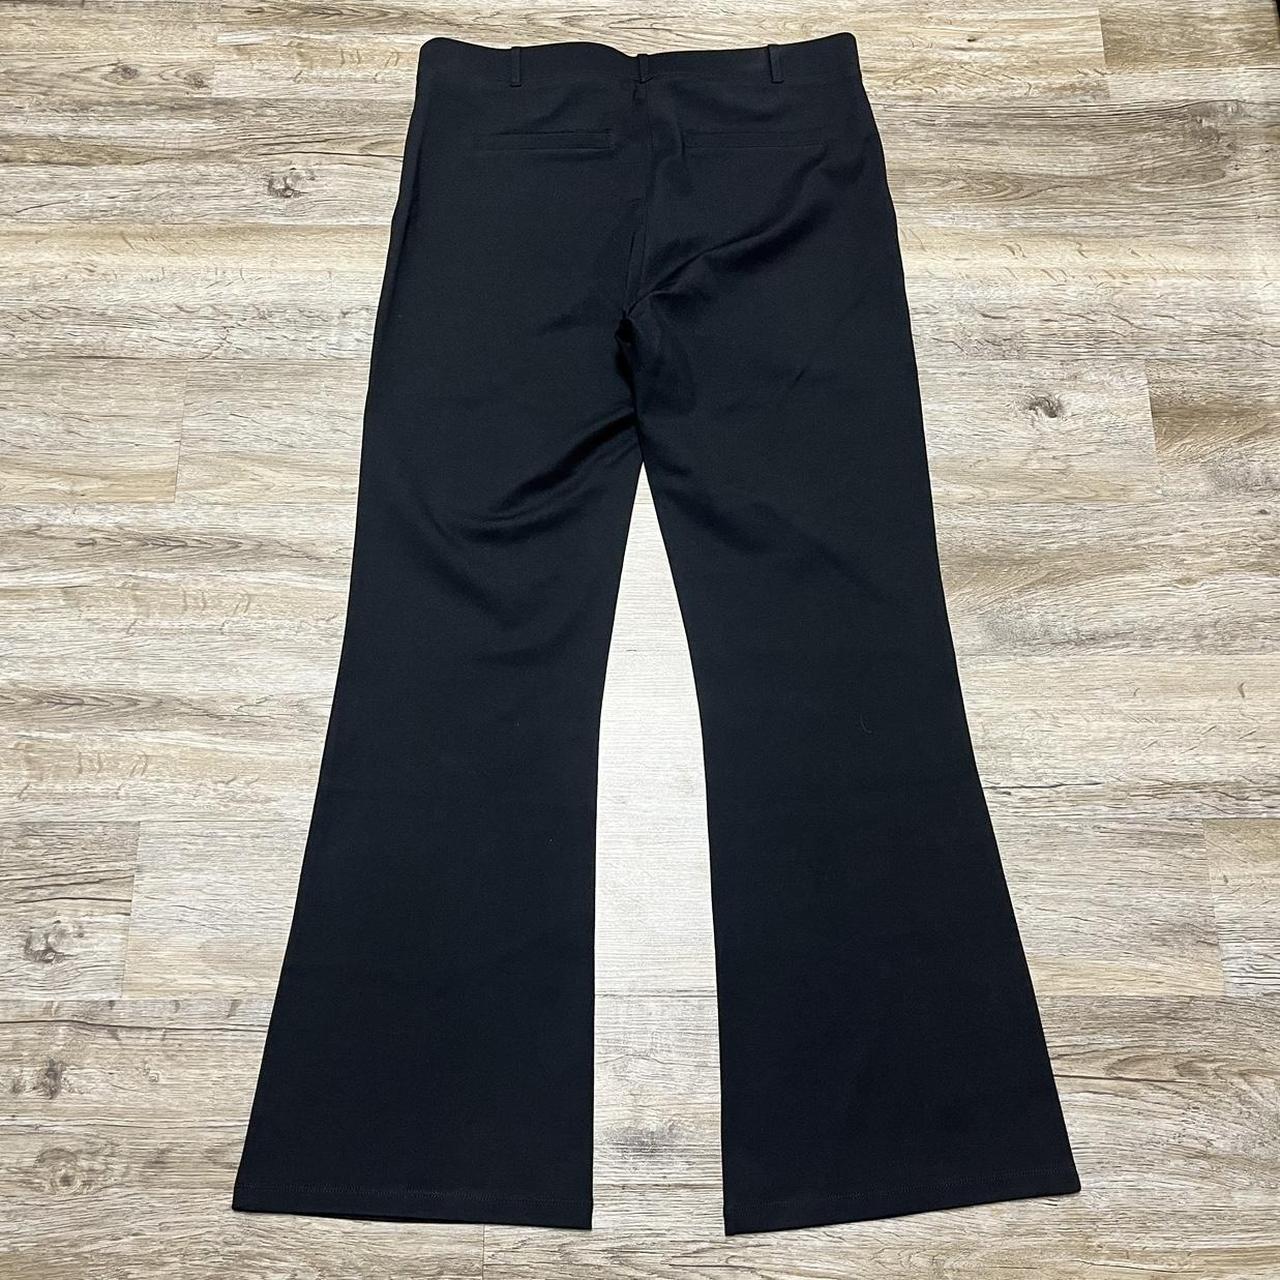 Betabrand Classic Dress Yoga Pants Black Boot Cut - Depop